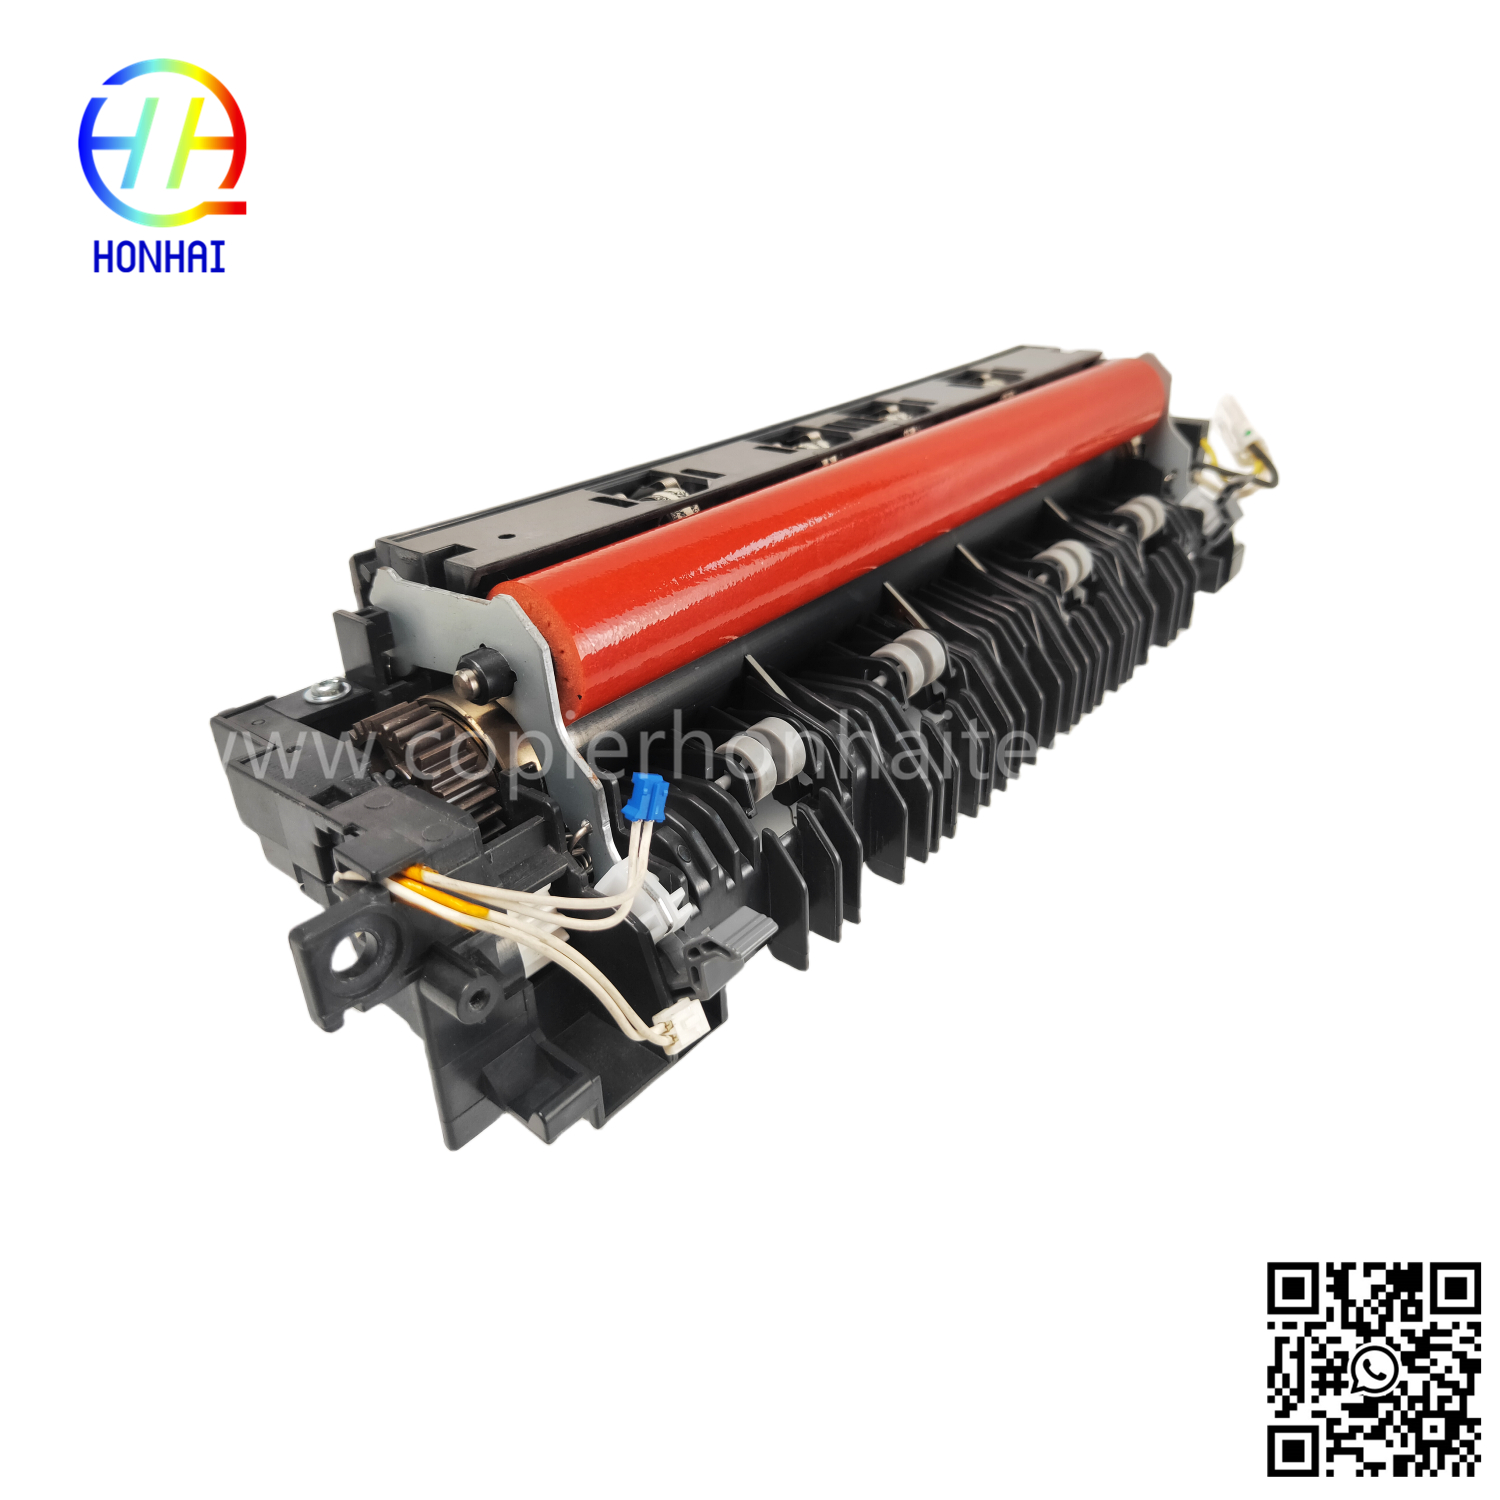 https://www.copierhonhaitech.com/fuser-unit-220v-for-brother-mfc-l3750cdw-mfc-l3770cdw-fuser-assembly-product/